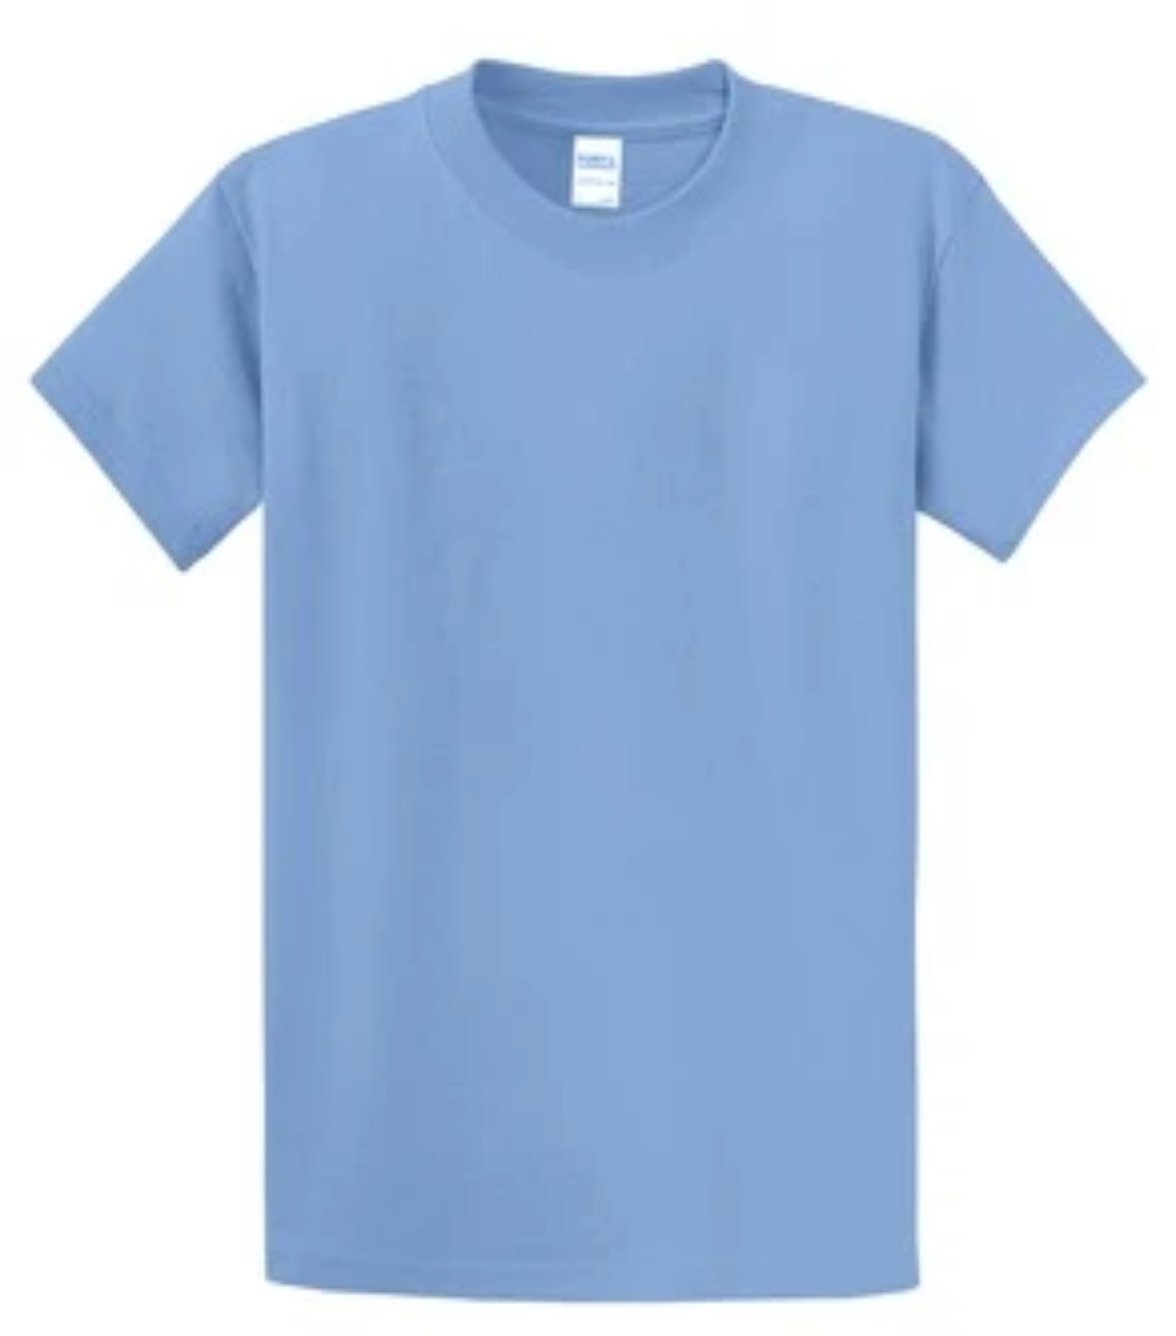 Port & Company 100% Cotton Essential T-Shirt Light Blue Tall PC61T